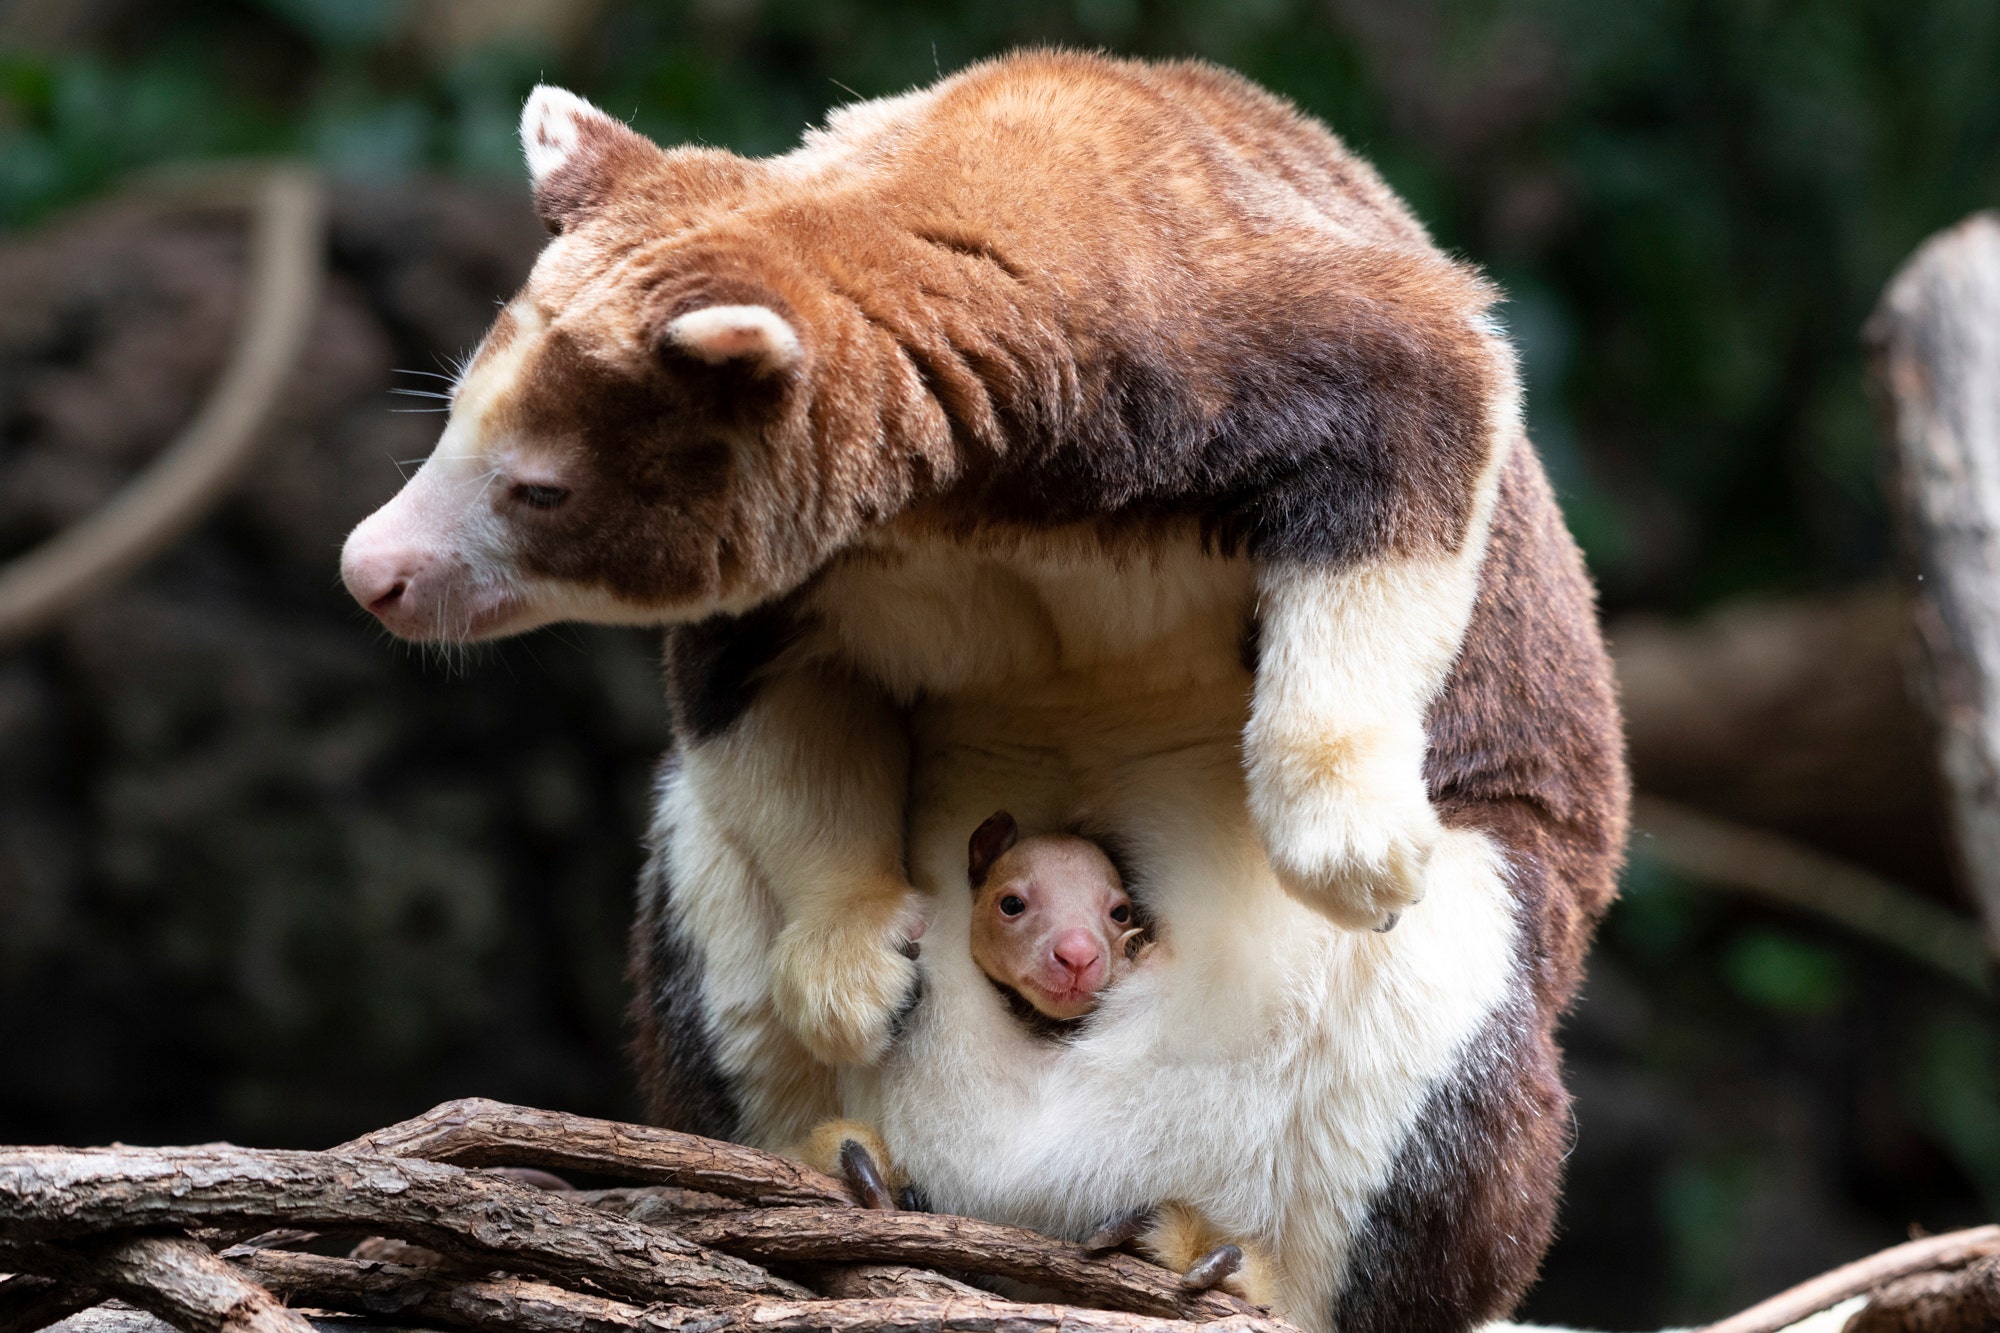 Families visiting Bronx Zoo have amazing sight to see: Rare baby tree kangaroo